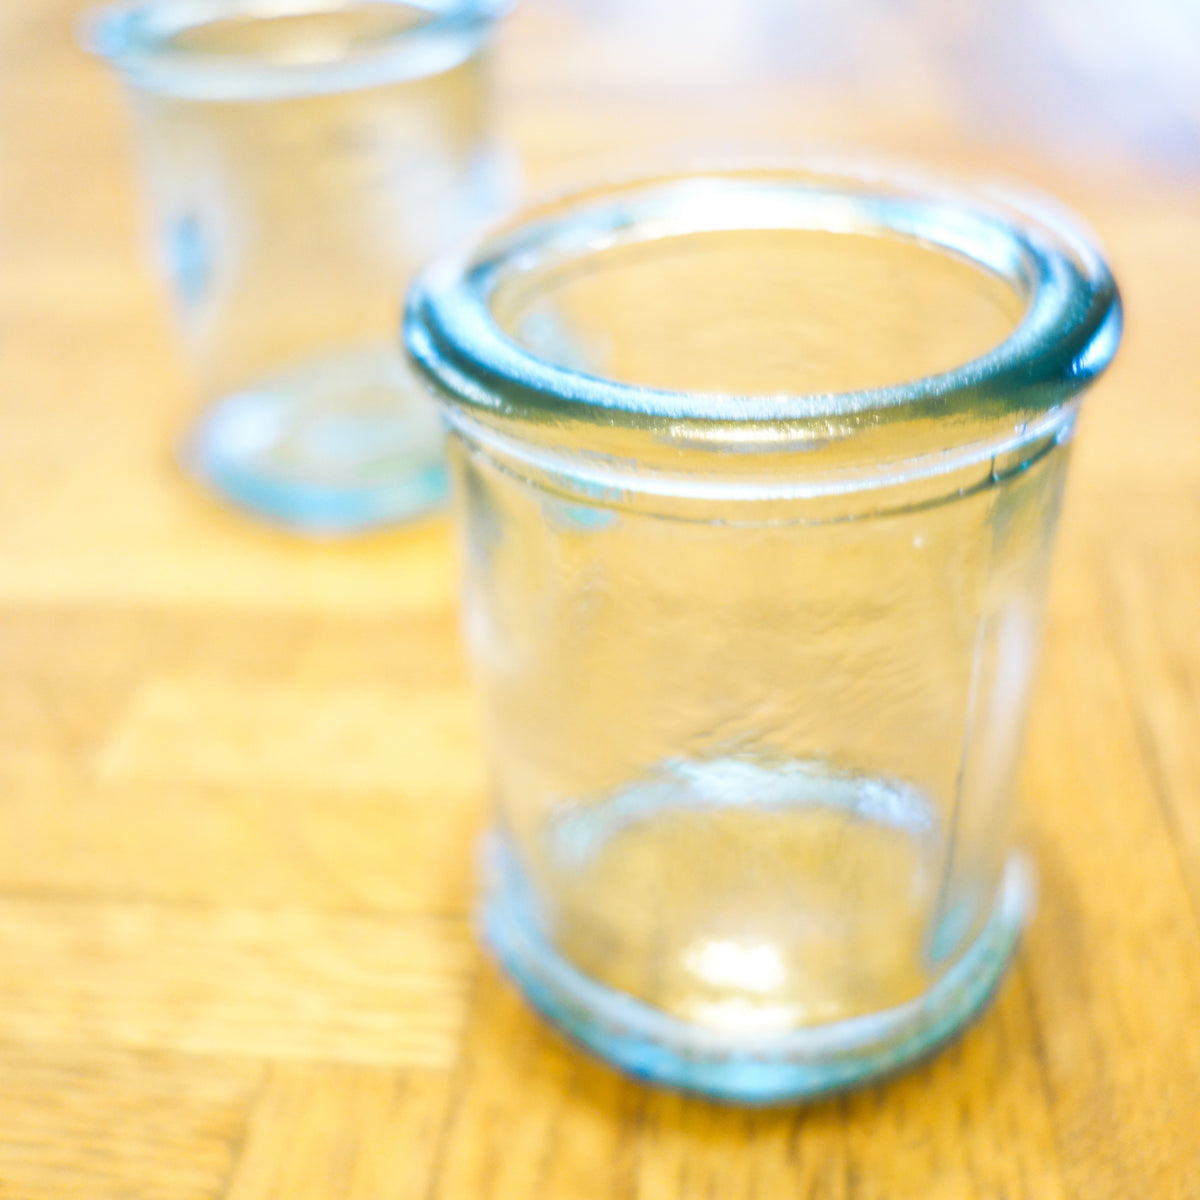 Recyclable Mason Jars, Safe Drinking Jars